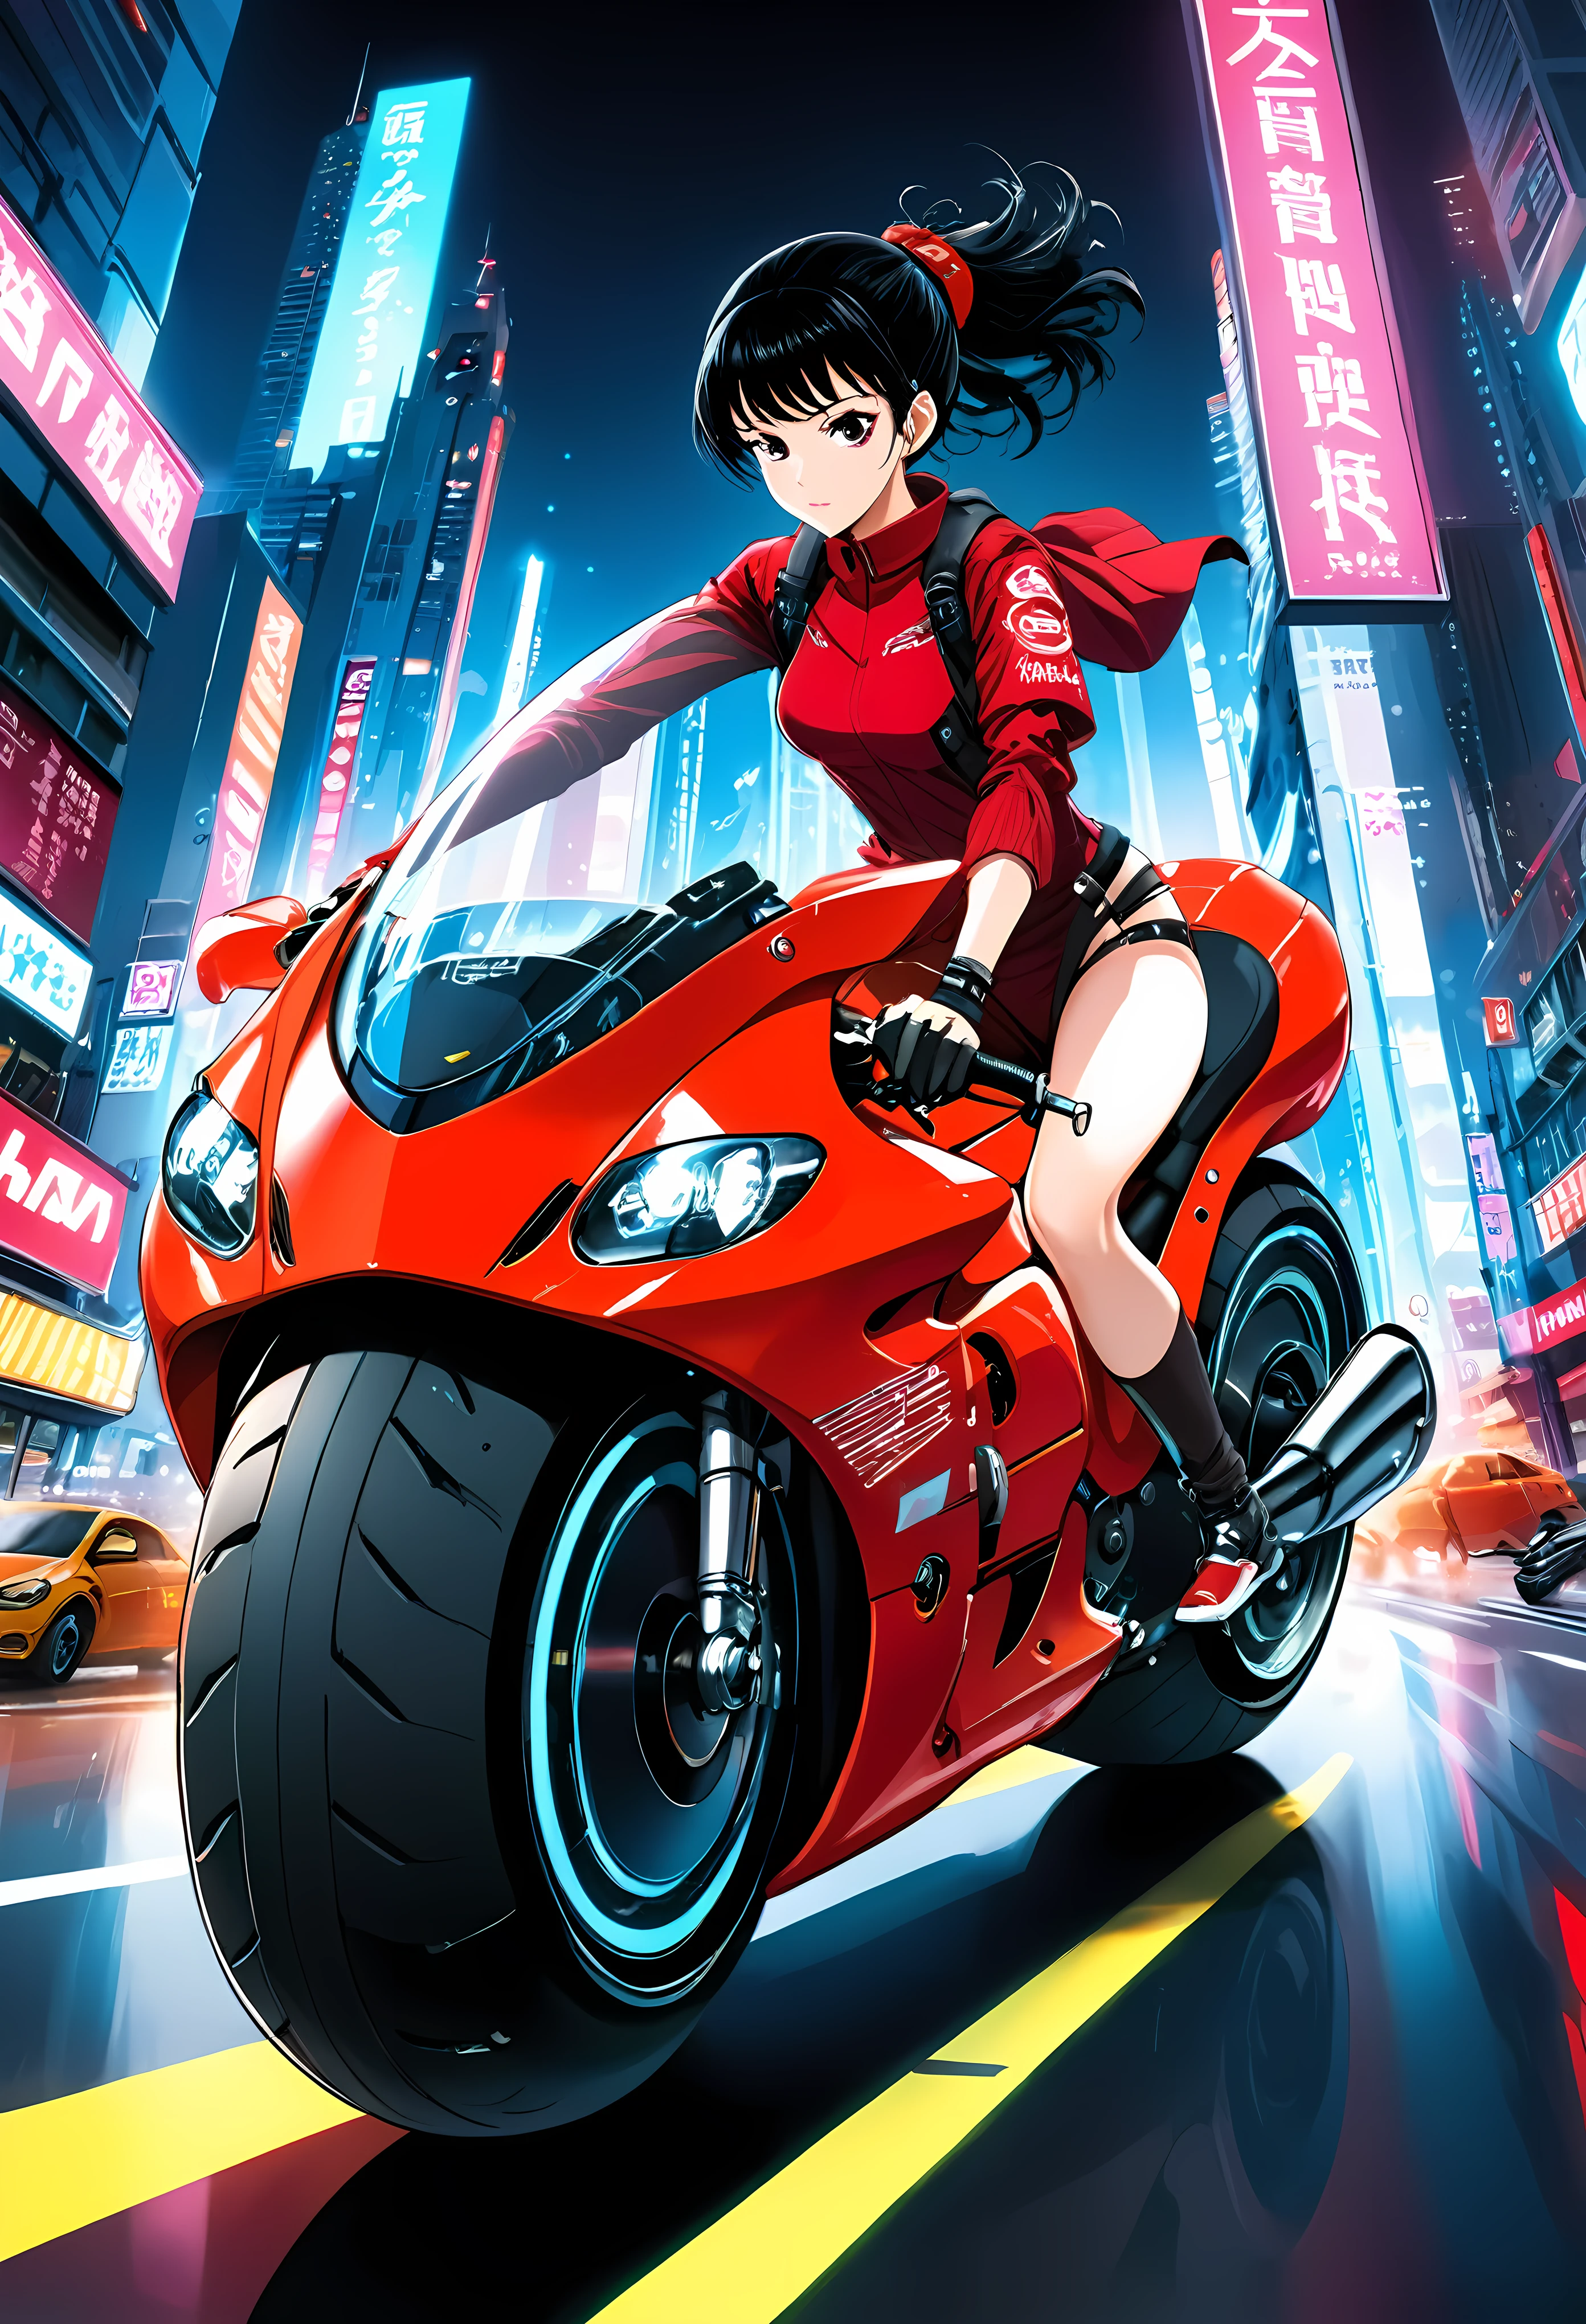 Create a 세부 사항ed image of a futuristic motorcycle inspired by the iconic bike from the classic Akira manga/일본 만화 영화. 오토바이는 매끈해야 한다, aerodynamic 설계 with a low-slung, 길쭉한 몸체. 선명한 레드 컬러와 윤기 있는 마감이 특징이어야 합니다.. 앞면은 곡선으로 되어 있어야 합니다., 거품 모양의 유리창, 자전거의 유선형 형태에 통합됨. 바퀴는 크고 두꺼워야합니다, 미래 지향적인, 거의 호버링과 같은 품질. The front wheel is parti모두y covered by an angular fender, 뒷바퀴가 노출된 상태에서, showcasing intricate suspension and mechanical 세부 사항s. The bike should have 세부 사항ed decals, 로고와 미래 지향적인 텍스트 포함. 좌석은 1인 탑승자에 맞게 윤곽이 잡혀야 합니다., 자전거 본체에 완벽하게 혼합됨. 핸들바는 최소화되어야 합니다., with advanced digital controls and displays integrated into the 설계. 배경은 네온 불빛이 켜진 밤의 도시 풍경이어야 합니다., with t모두 skyscrapers and futuristic elements, 사이버펑크 분위기를 자아내는. ((미래 지향적인 네온 의상을 입은 예쁜 여성 자전거 라이더):1.2). | ((완벽한_구성, 완벽한_설계, 완벽한_공들여 나열한 것, 완벽한_세부 사항, 극단론자_세부 사항ed)), ((향상시키다_모두, 고치다_모두)), 자세한 세부 사항, 향상시키다.
